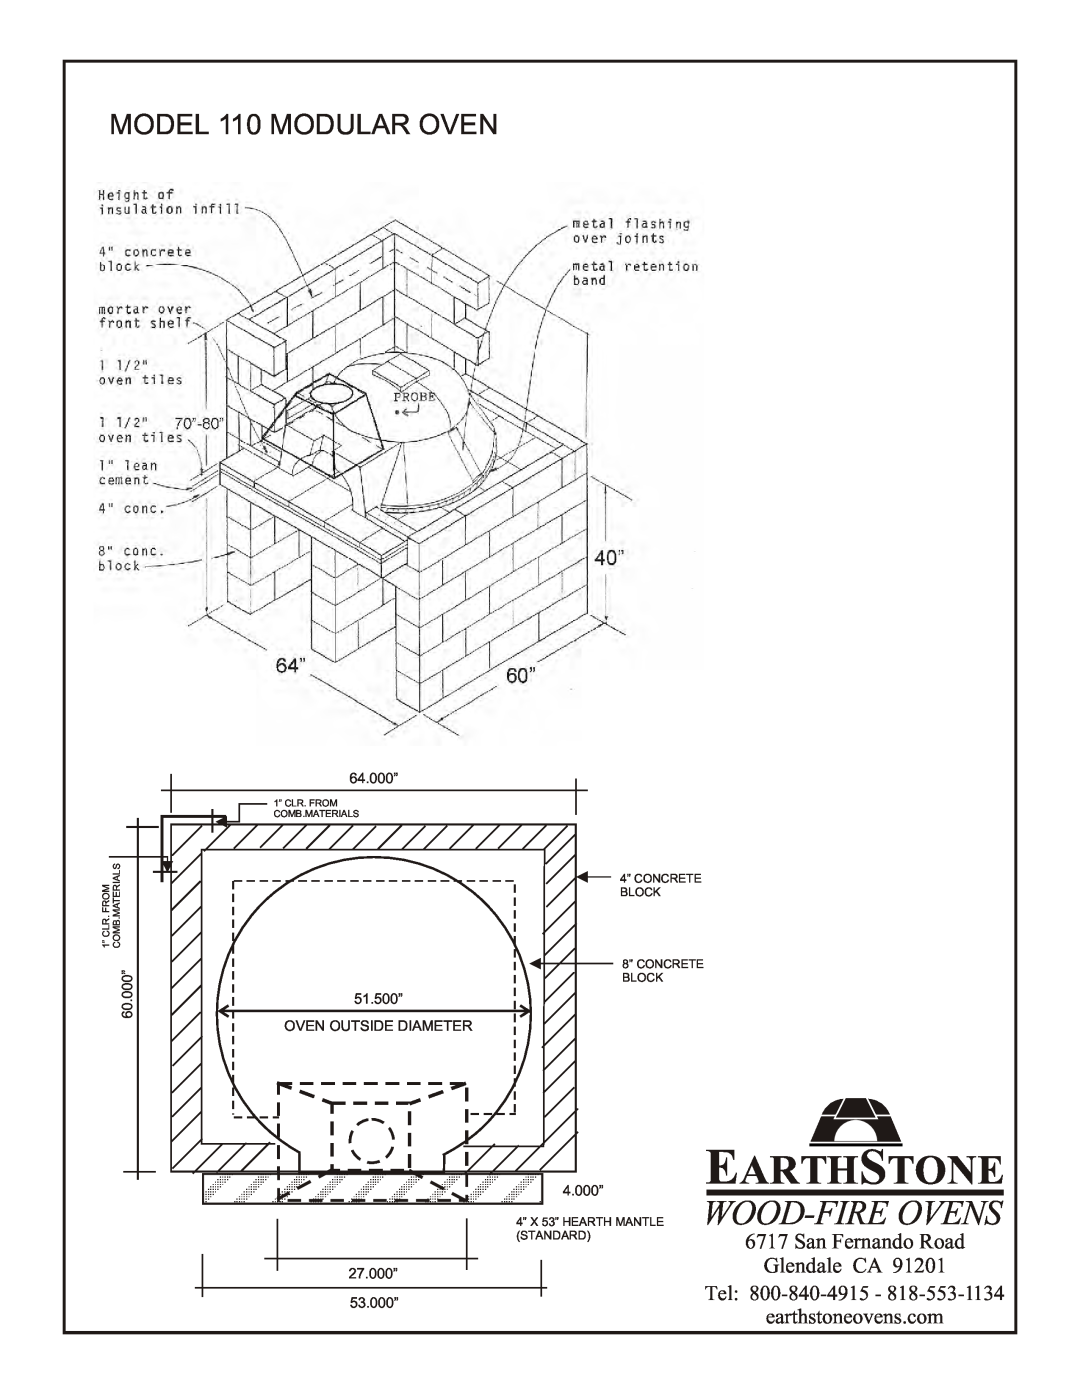 EarthStone 110 Modular Earth Stone, San Fernando Road, Glendale CA, Tel, Wood-Fire Ovens, MODEL 110 MODULAR OVEN, 60.000” 